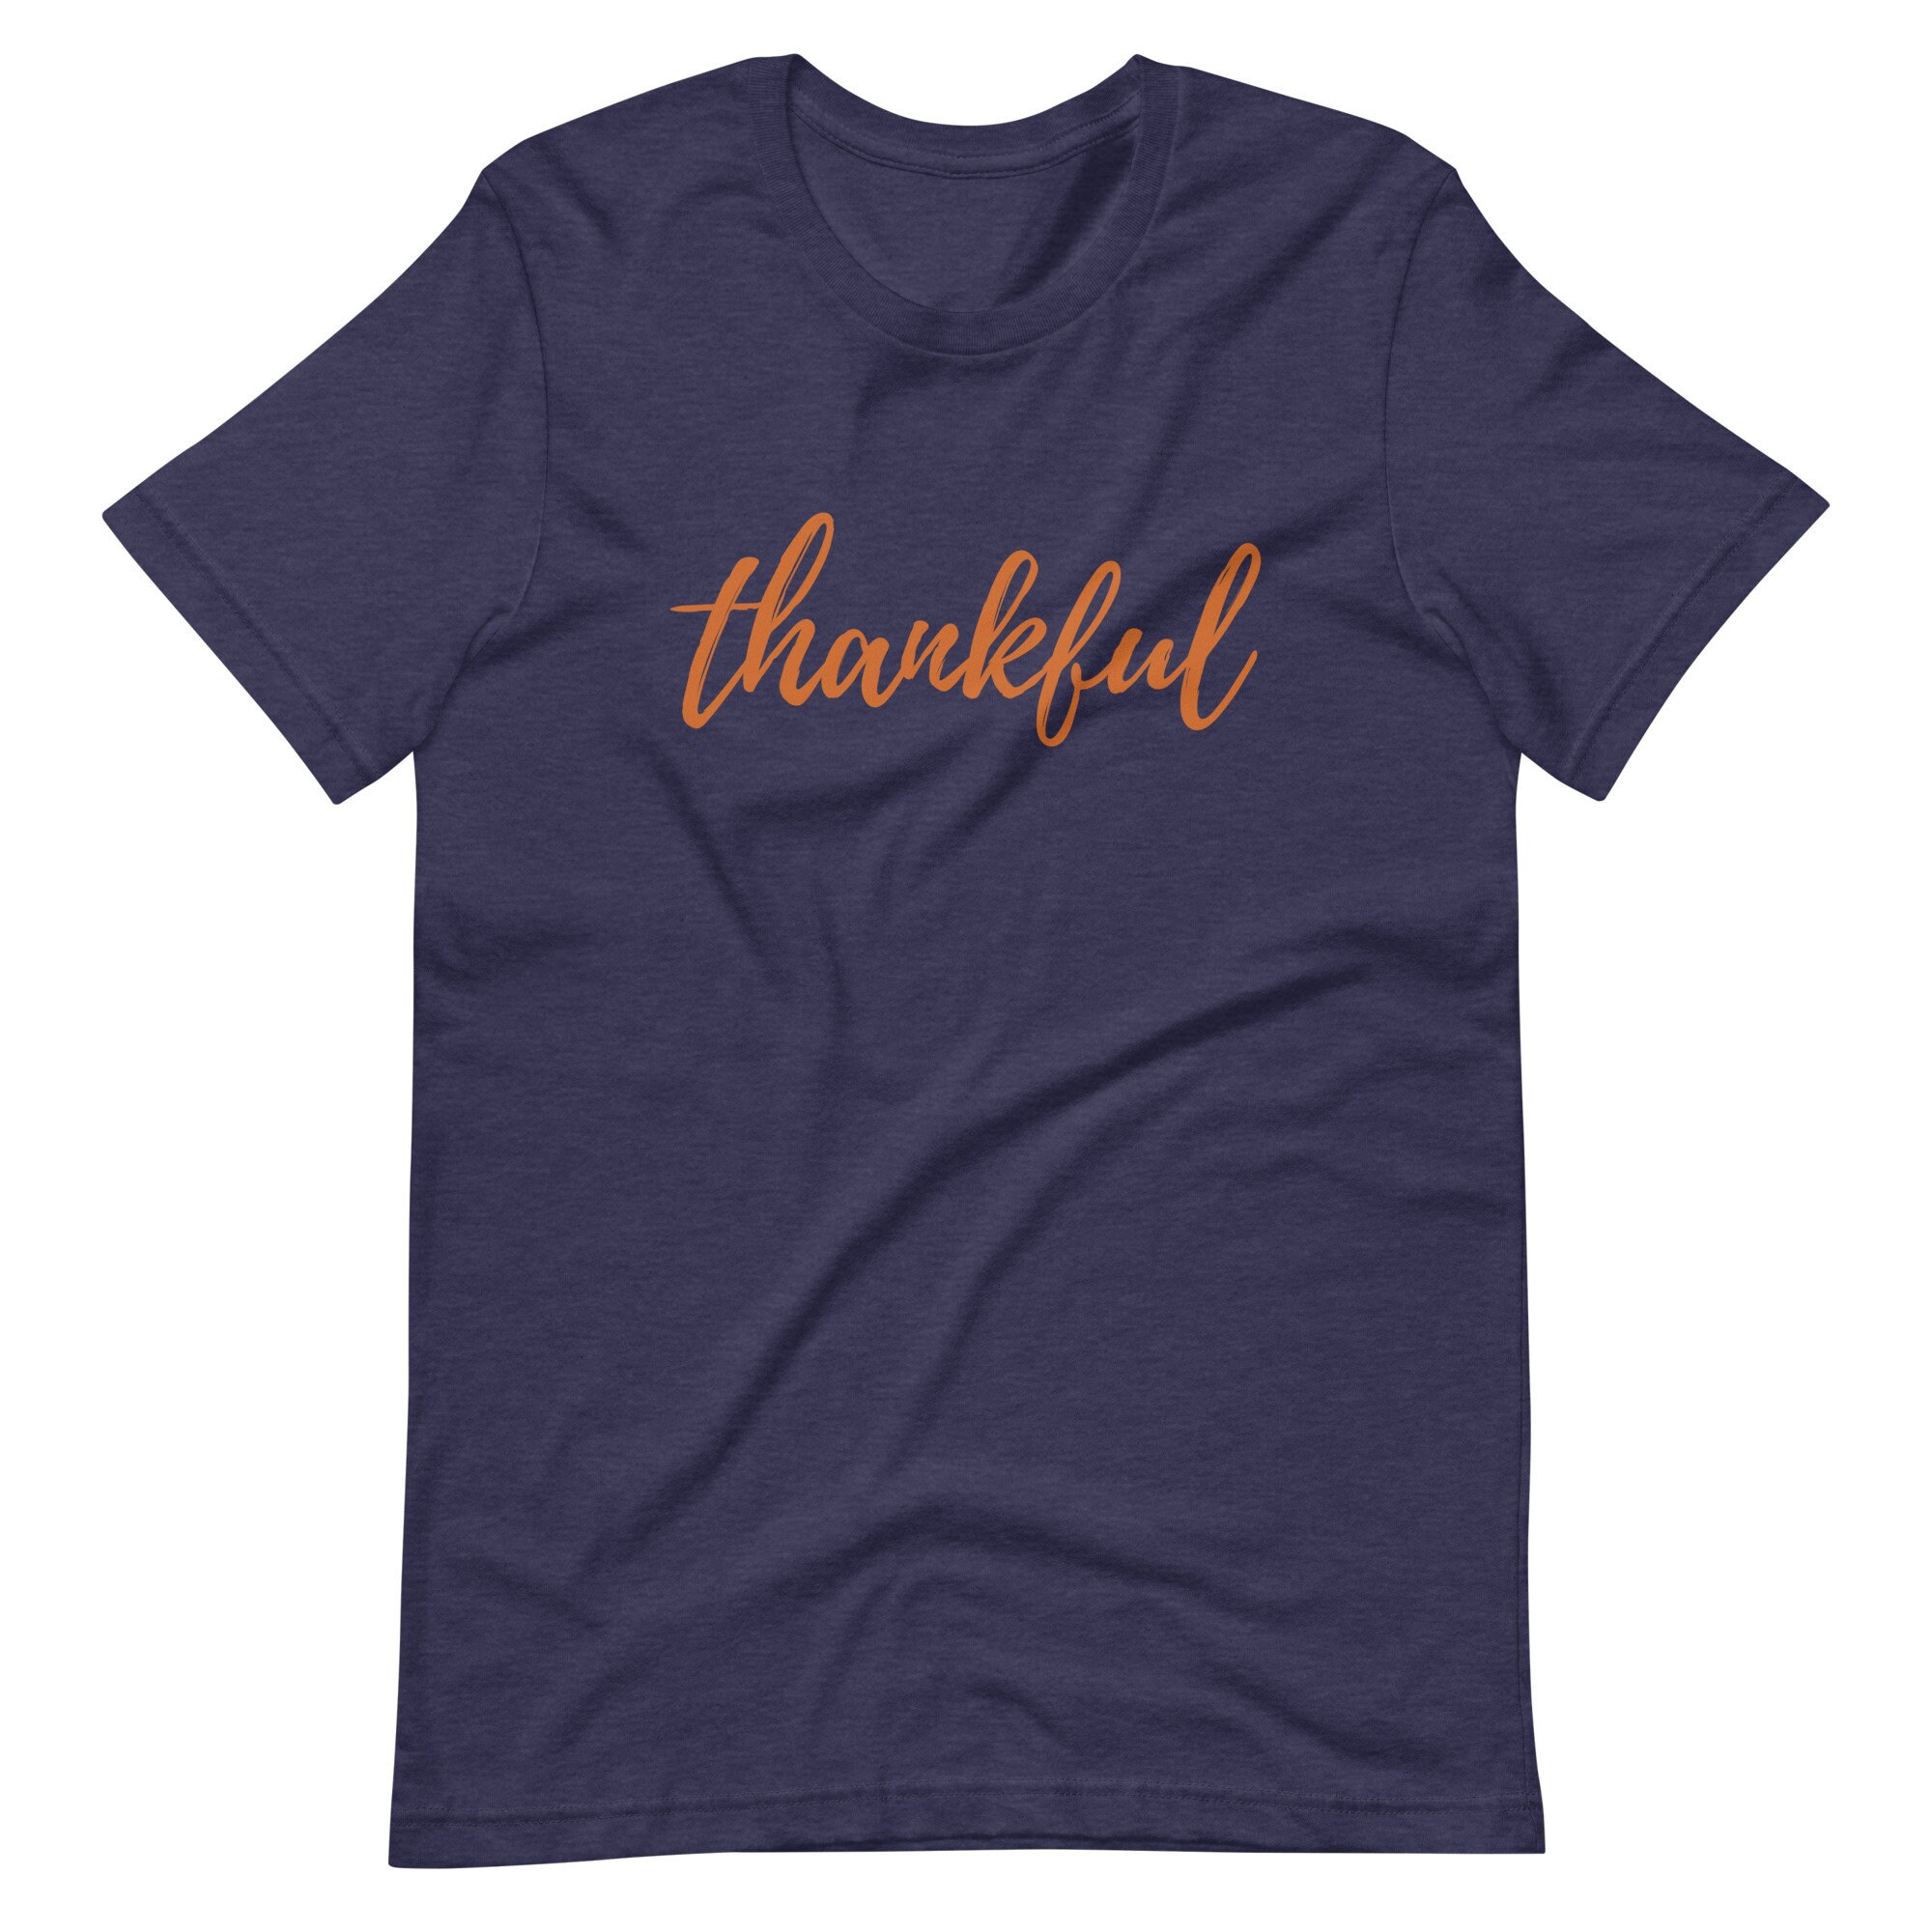 Tıs' a The Season To Be Grateful Thanksgiving Shirt Thankful T-Shirt Happy Thanksgiving Shirt Kleding Gender-neutrale kleding volwassenen Tops & T-shirts T-shirts Thanksgiving Dinner Shirt 